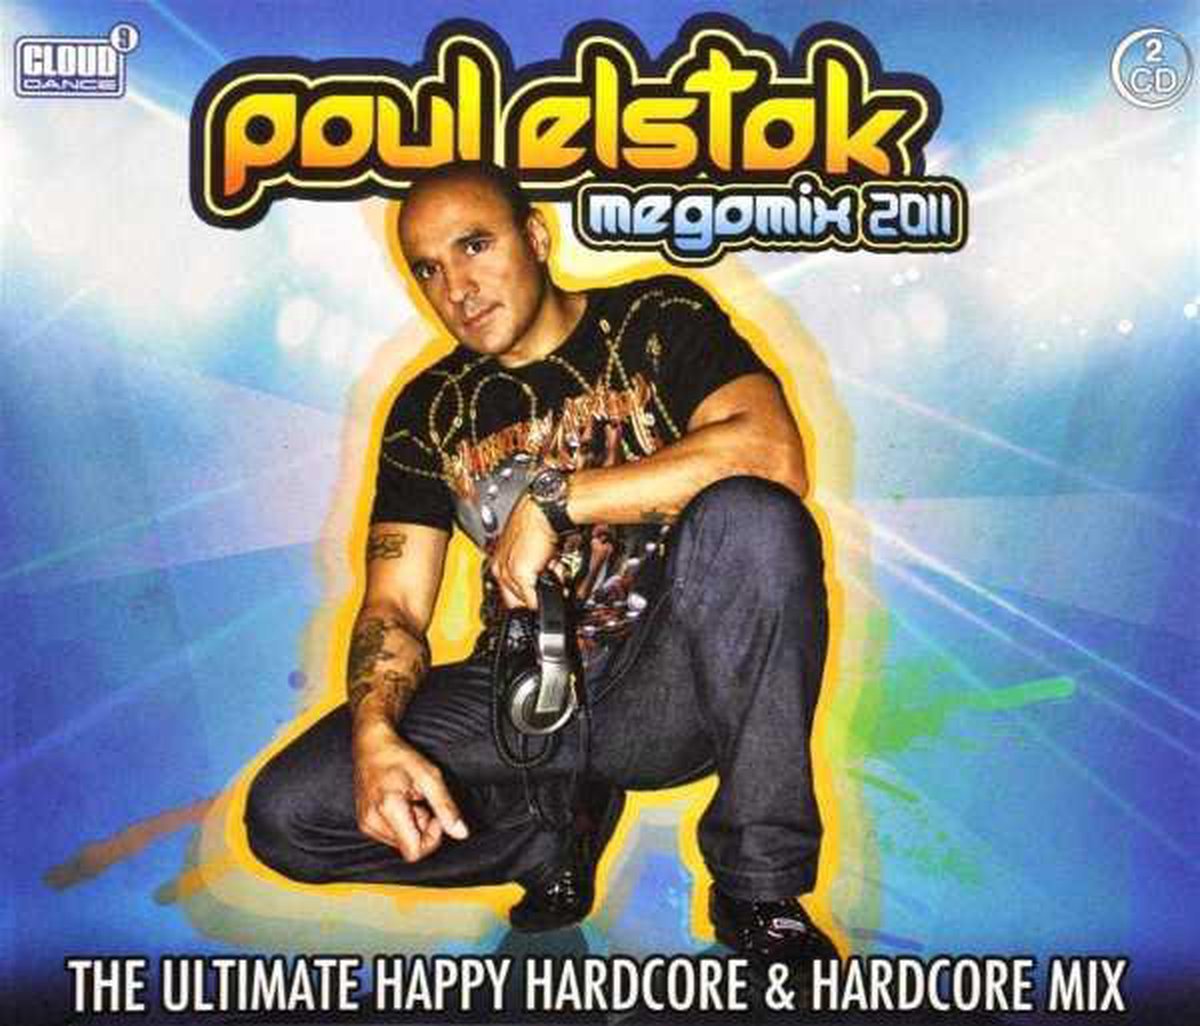 Paul Elstak Megamix 2CD (2011)